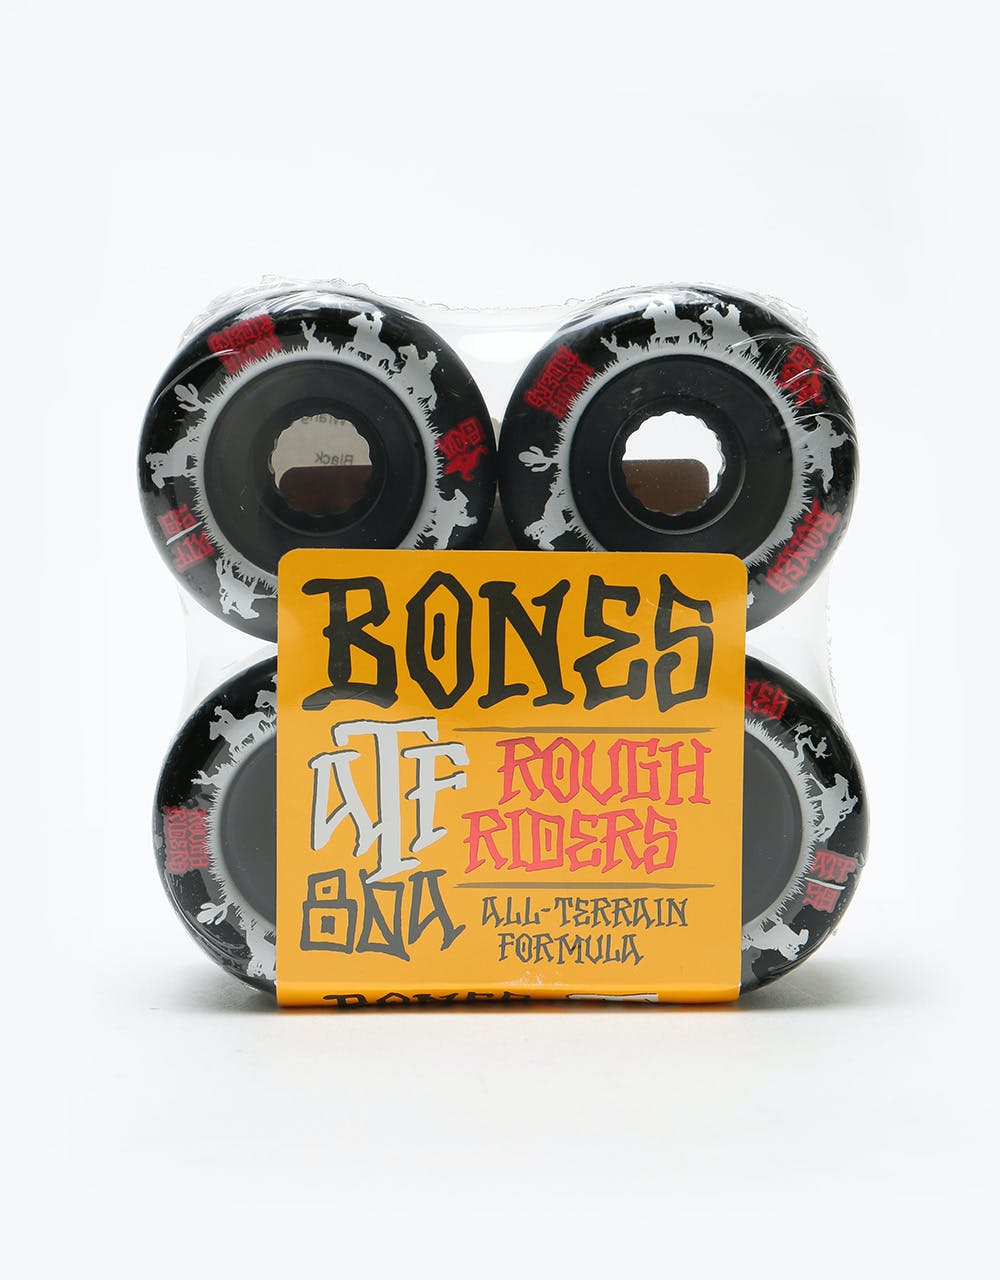 Bones Rough Riders Wranglers ATF Skateboard Wheel - 59mm